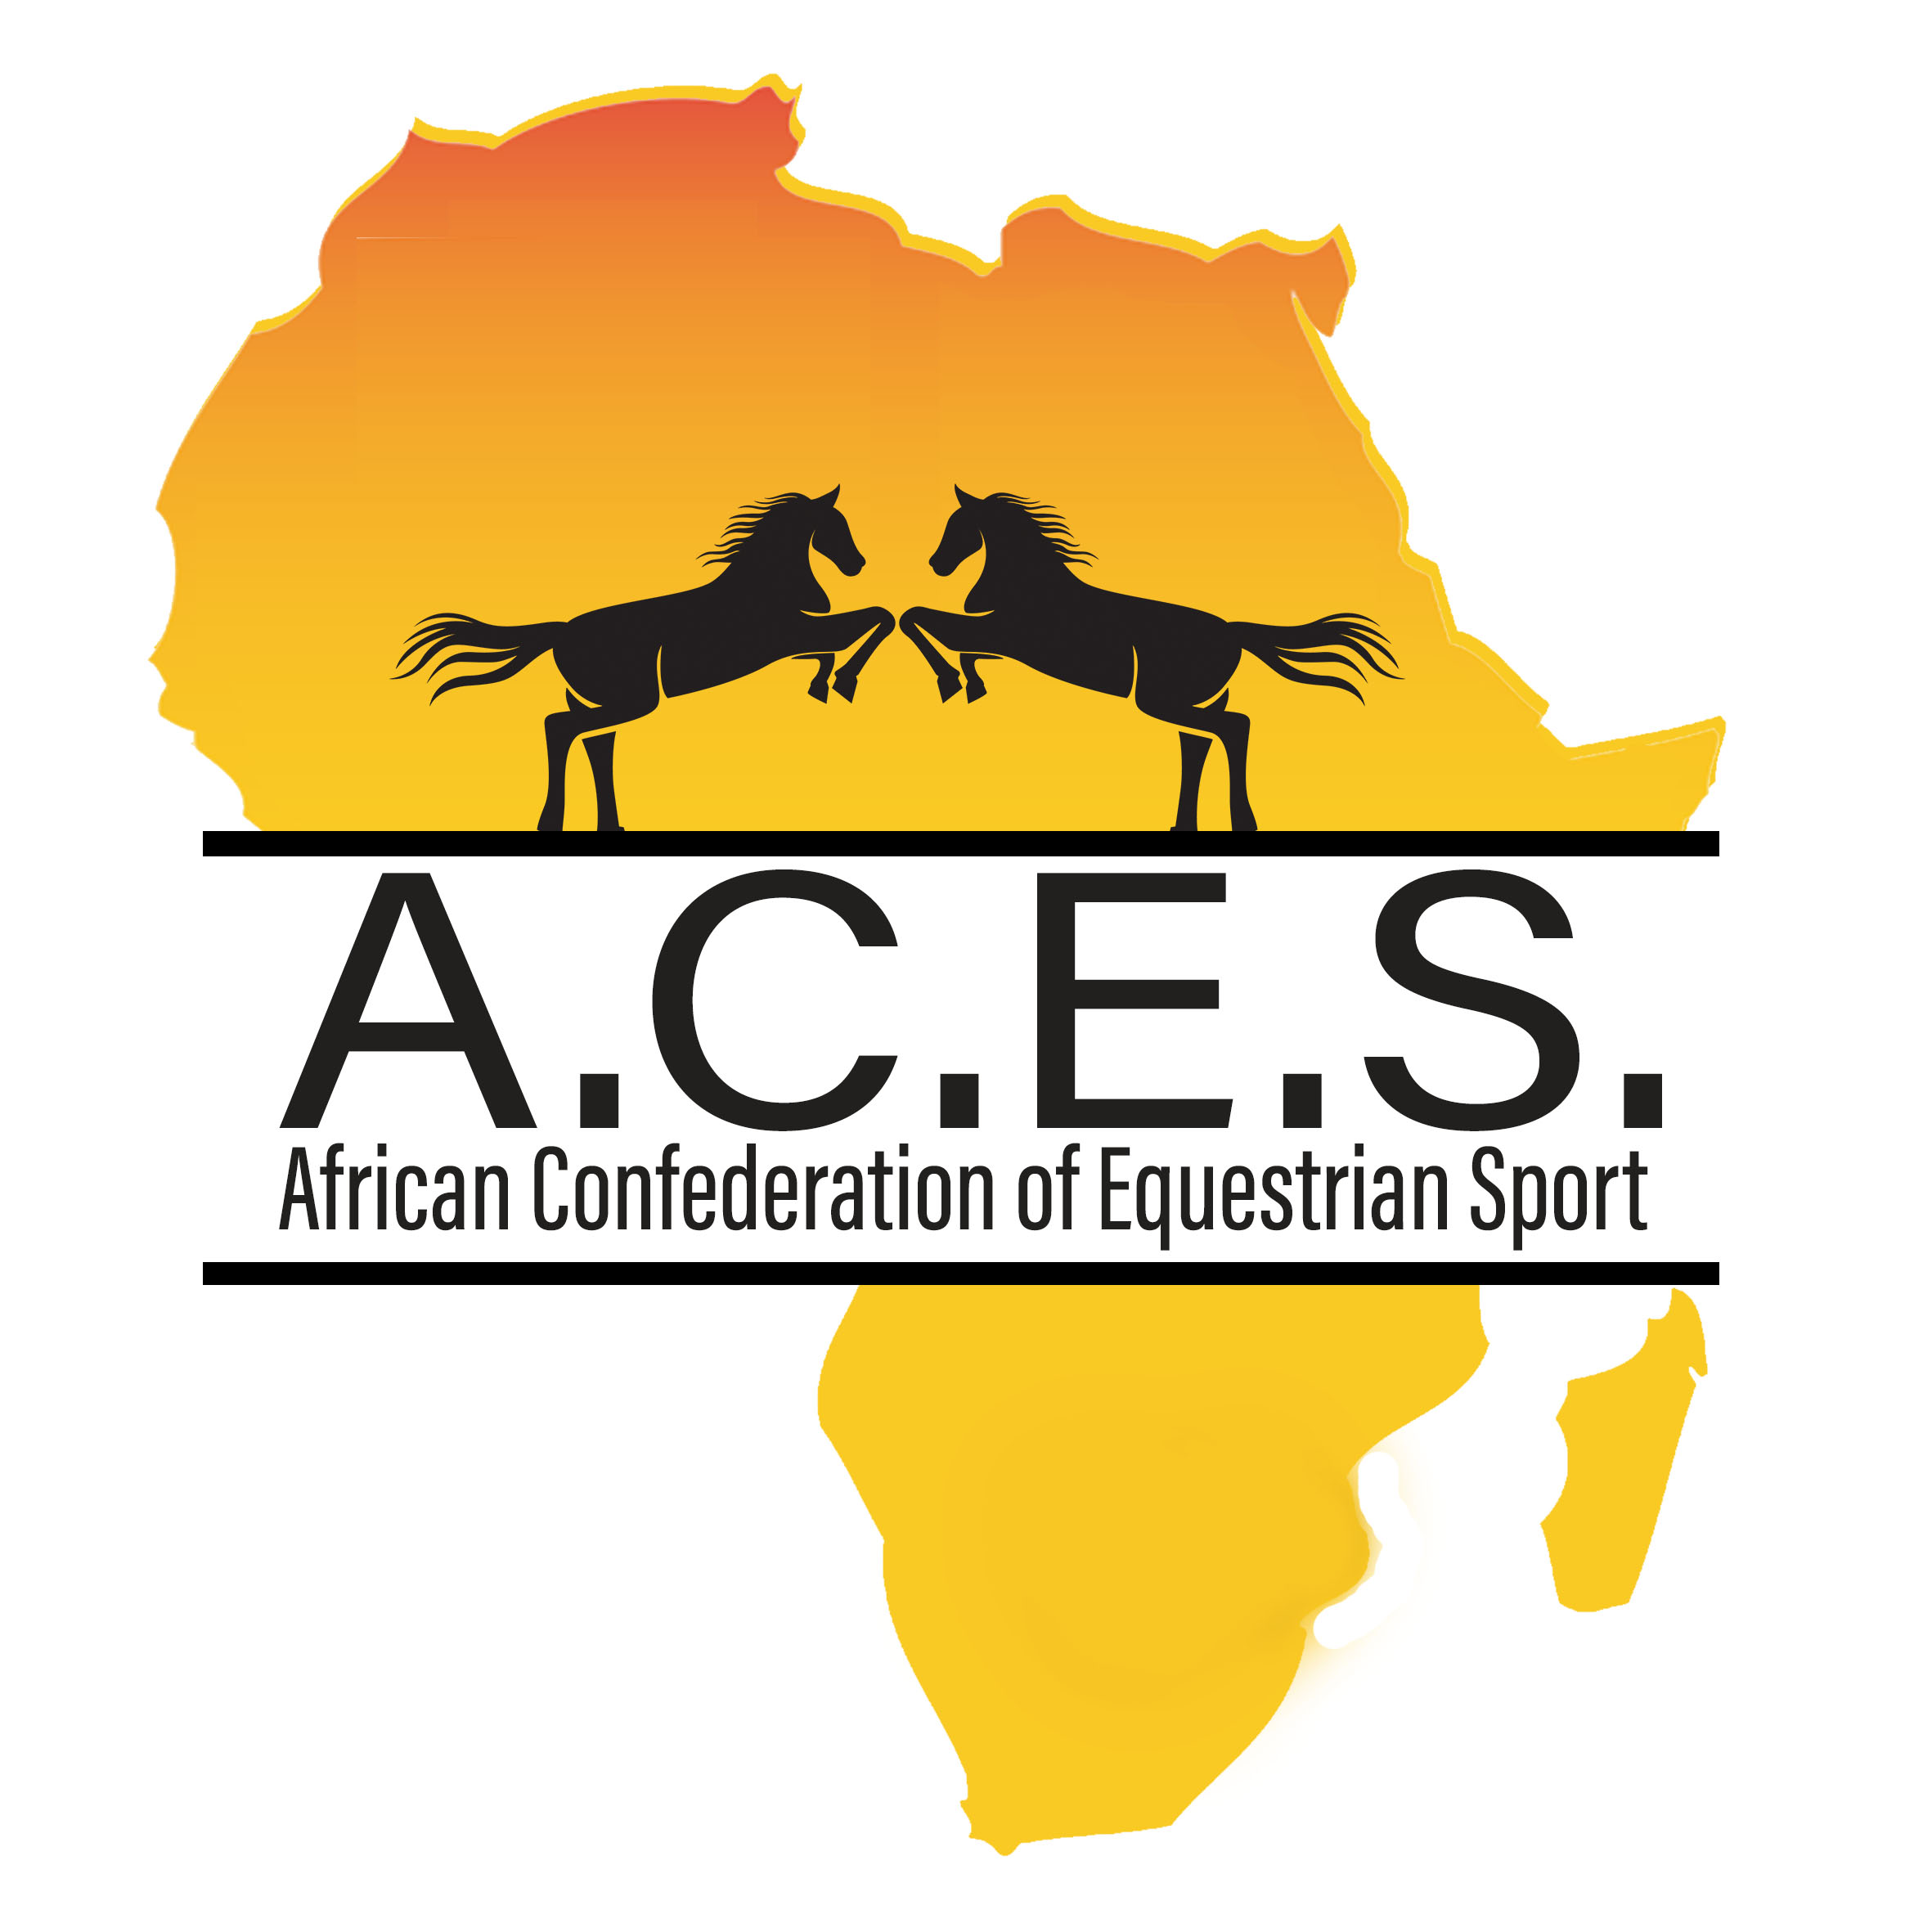 African Confederation of Equestrian Sport